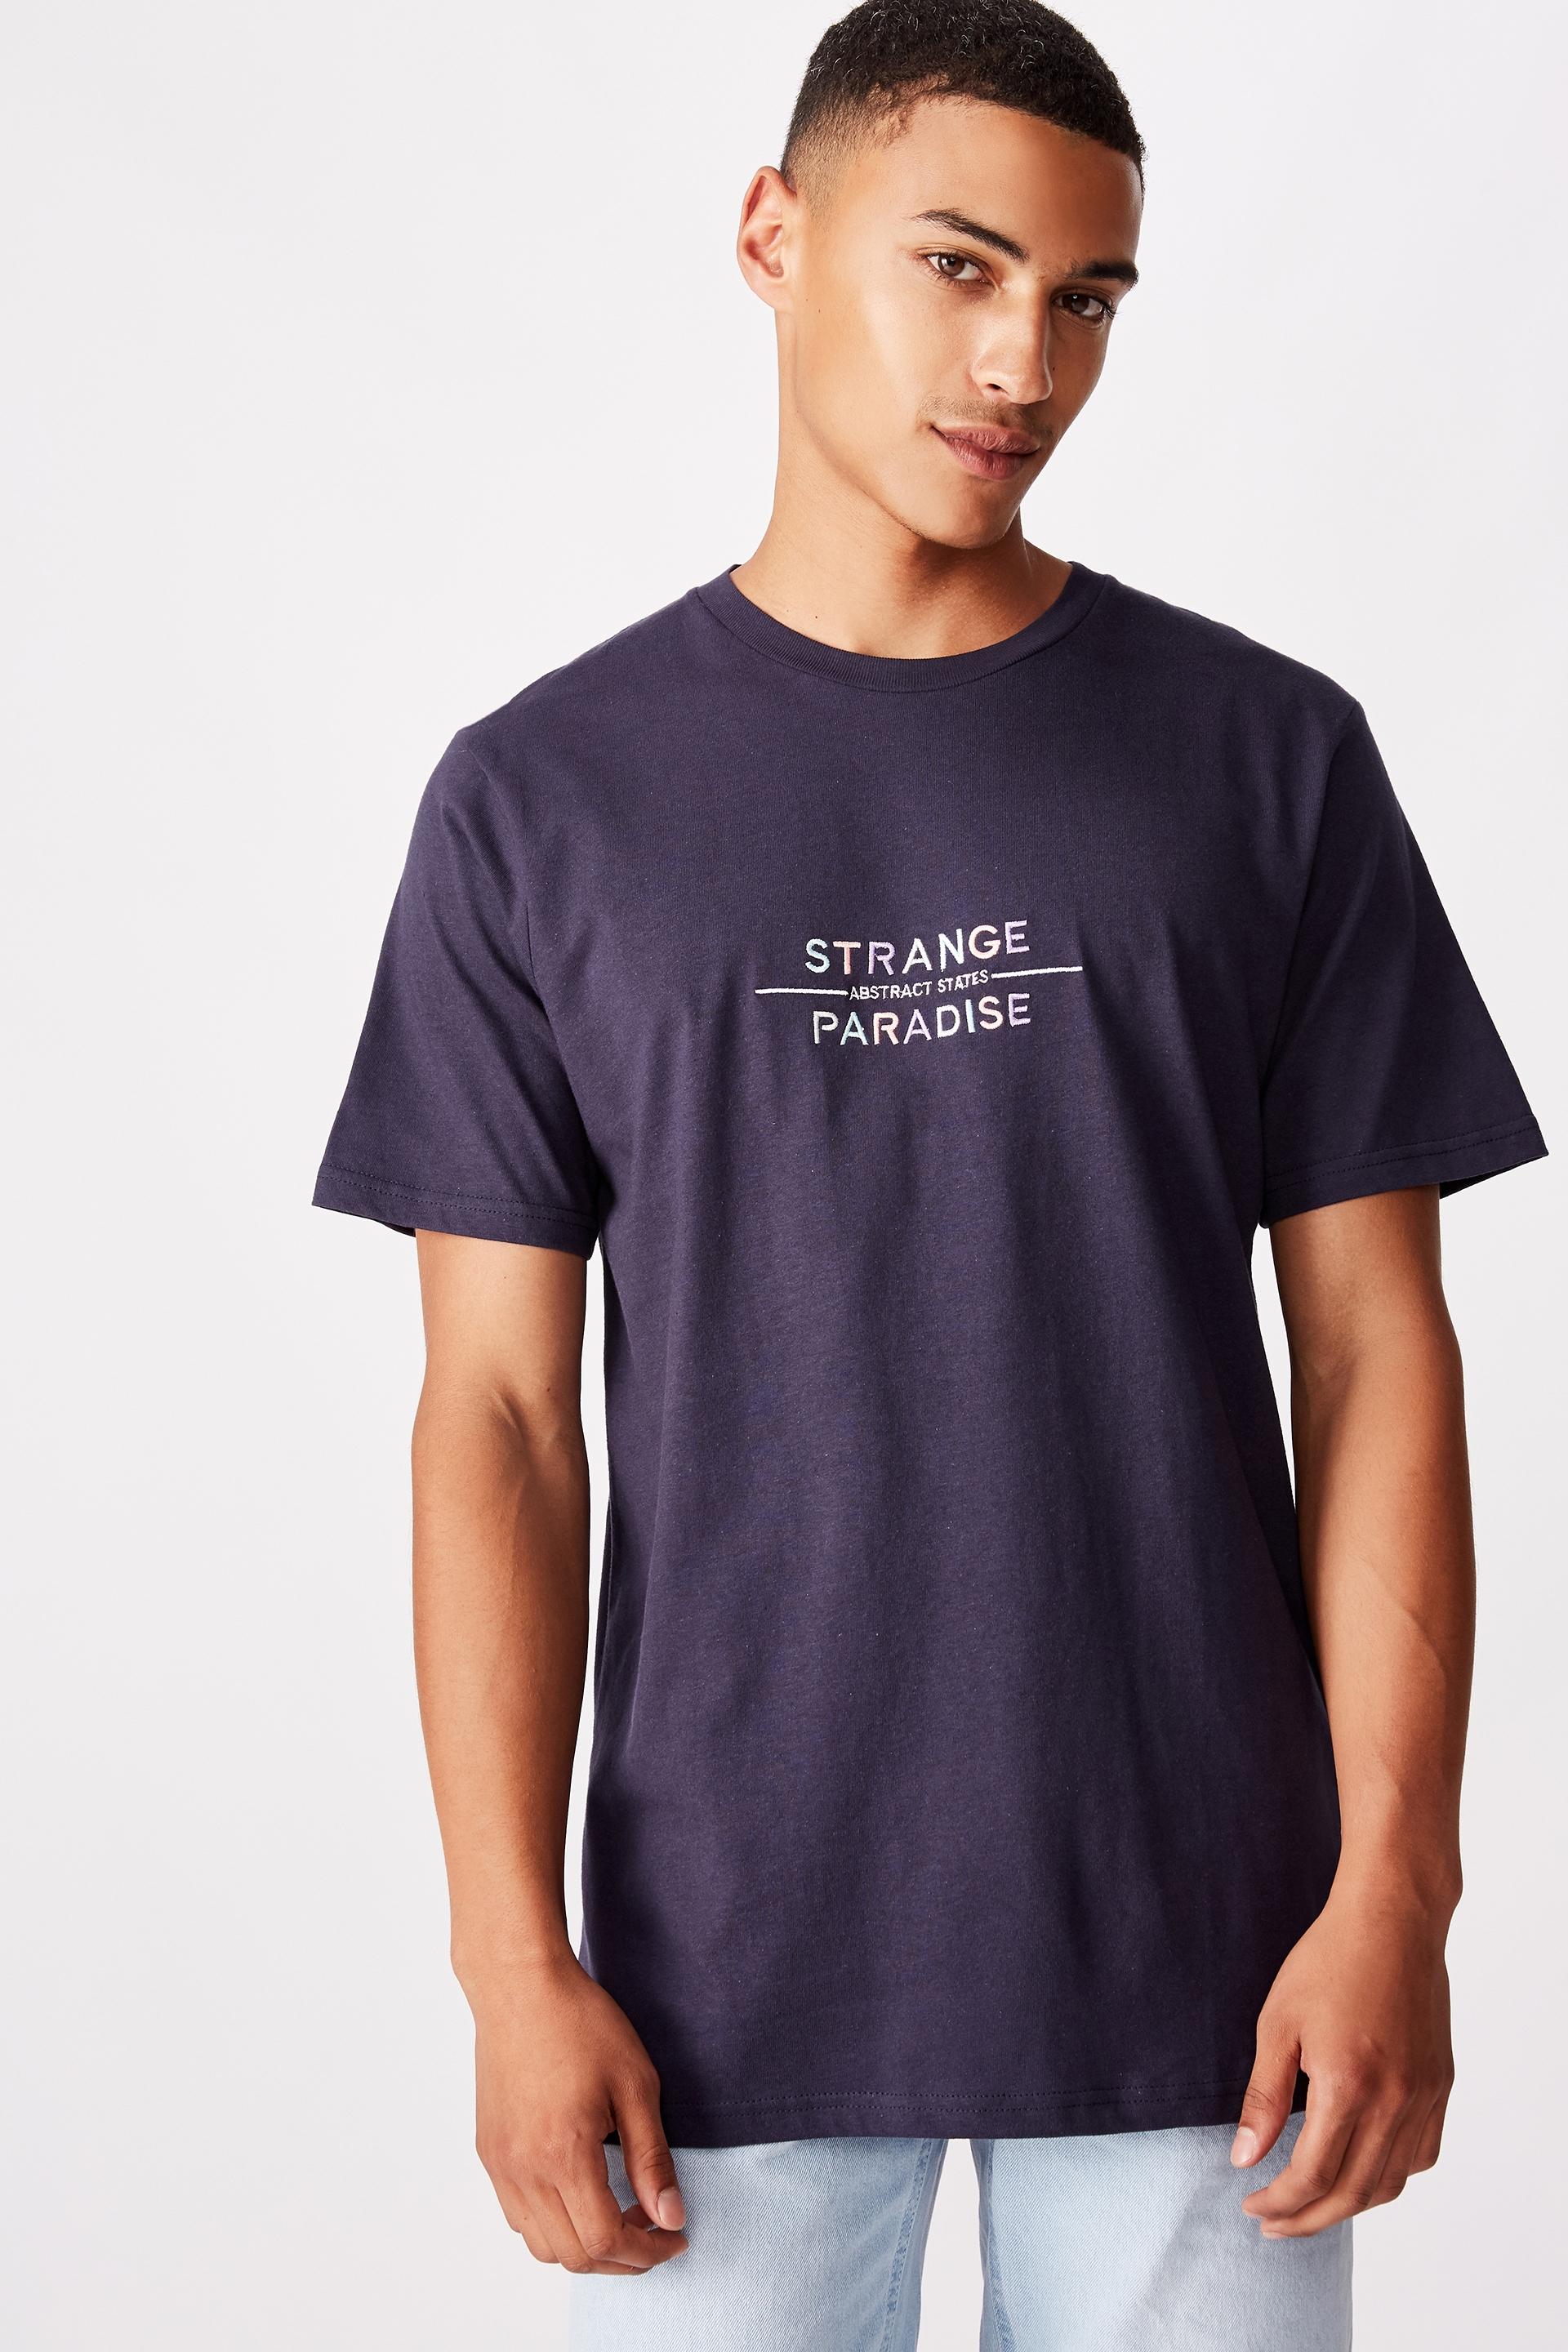 Strange paradise emb tbar text t-shirt - true navy Cotton On T-Shirts ...